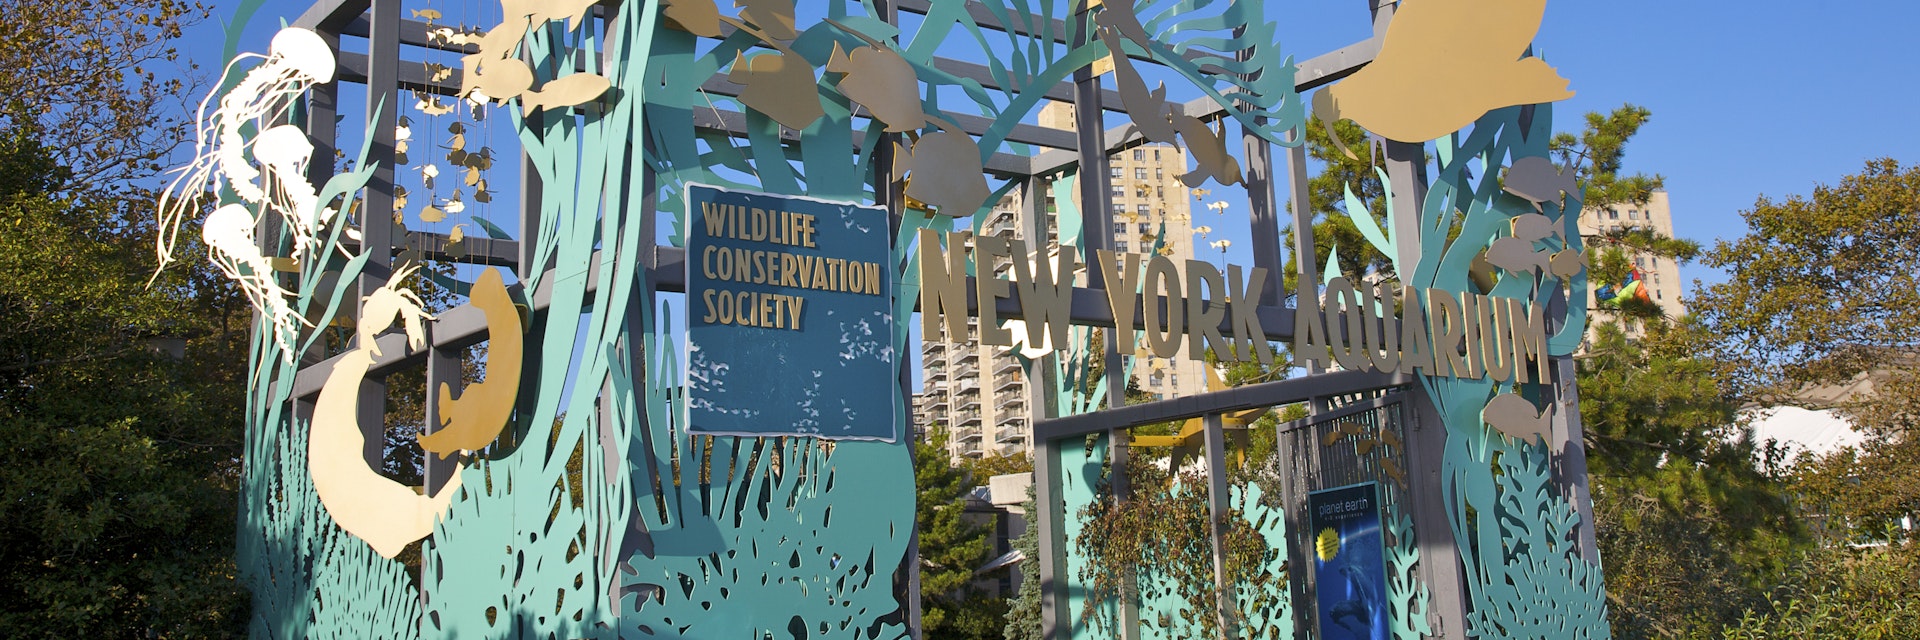 Entrance to New York Aquarium, Wildlife Conservation Society, Coney Island, Brooklyn, New York, U.S.A.